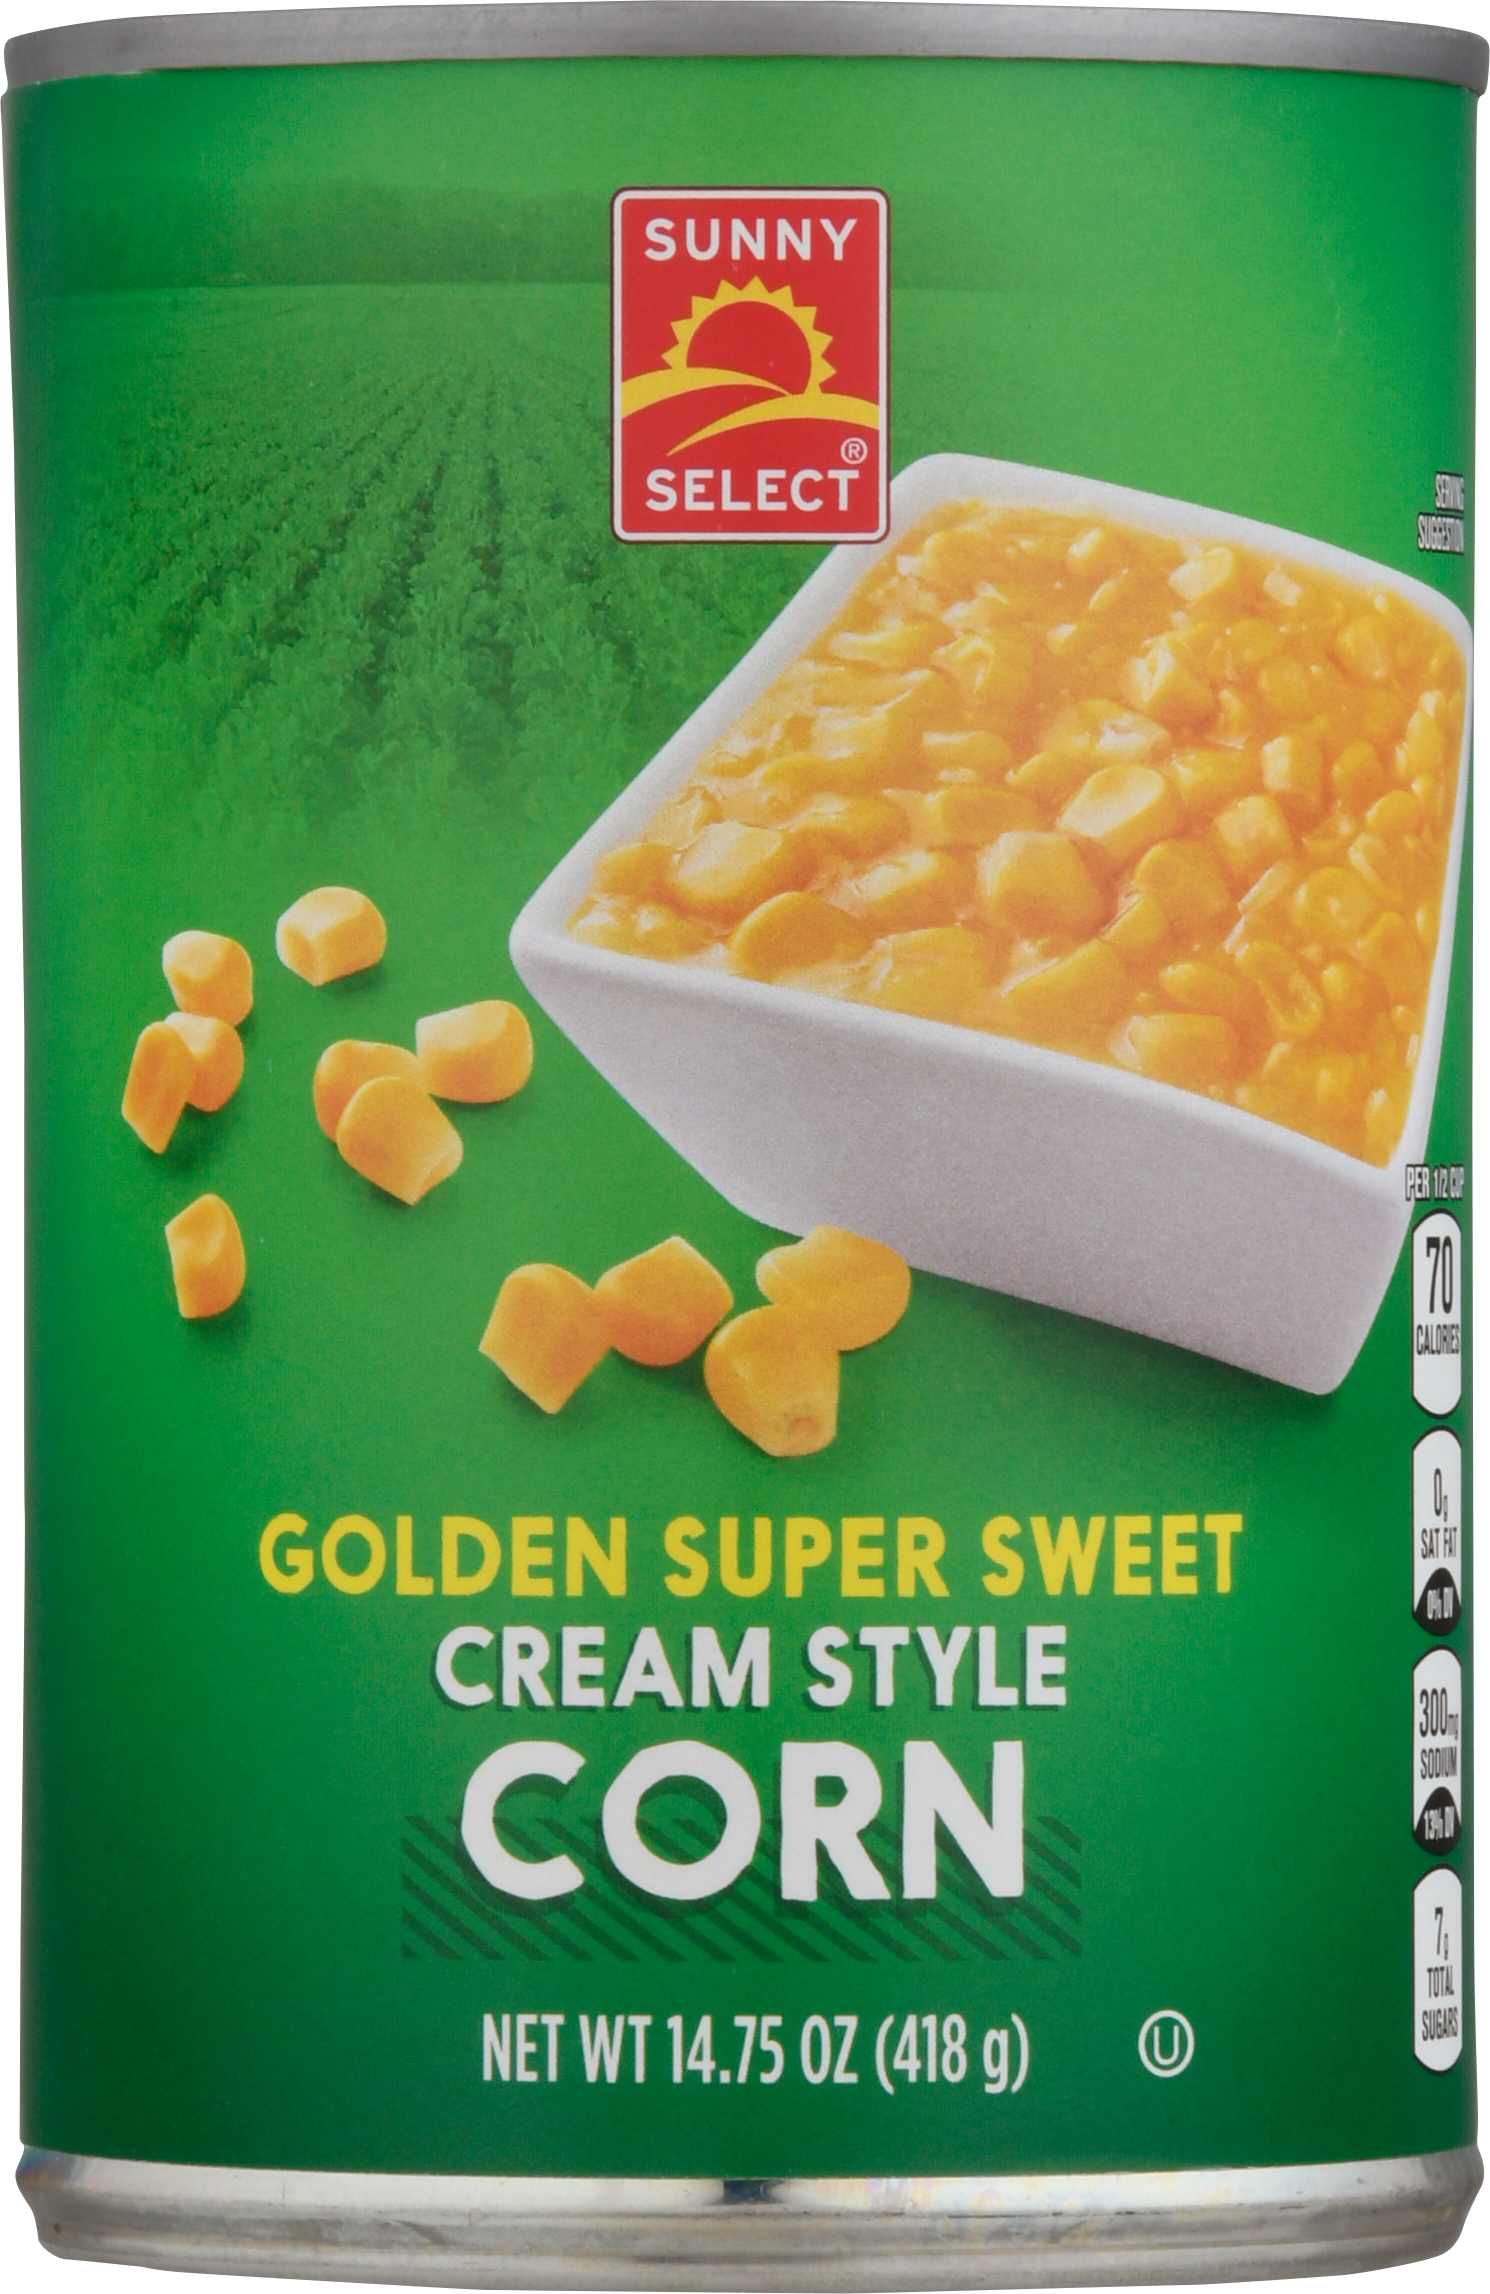 Corn, Golden Super Sweet, Cream Style image